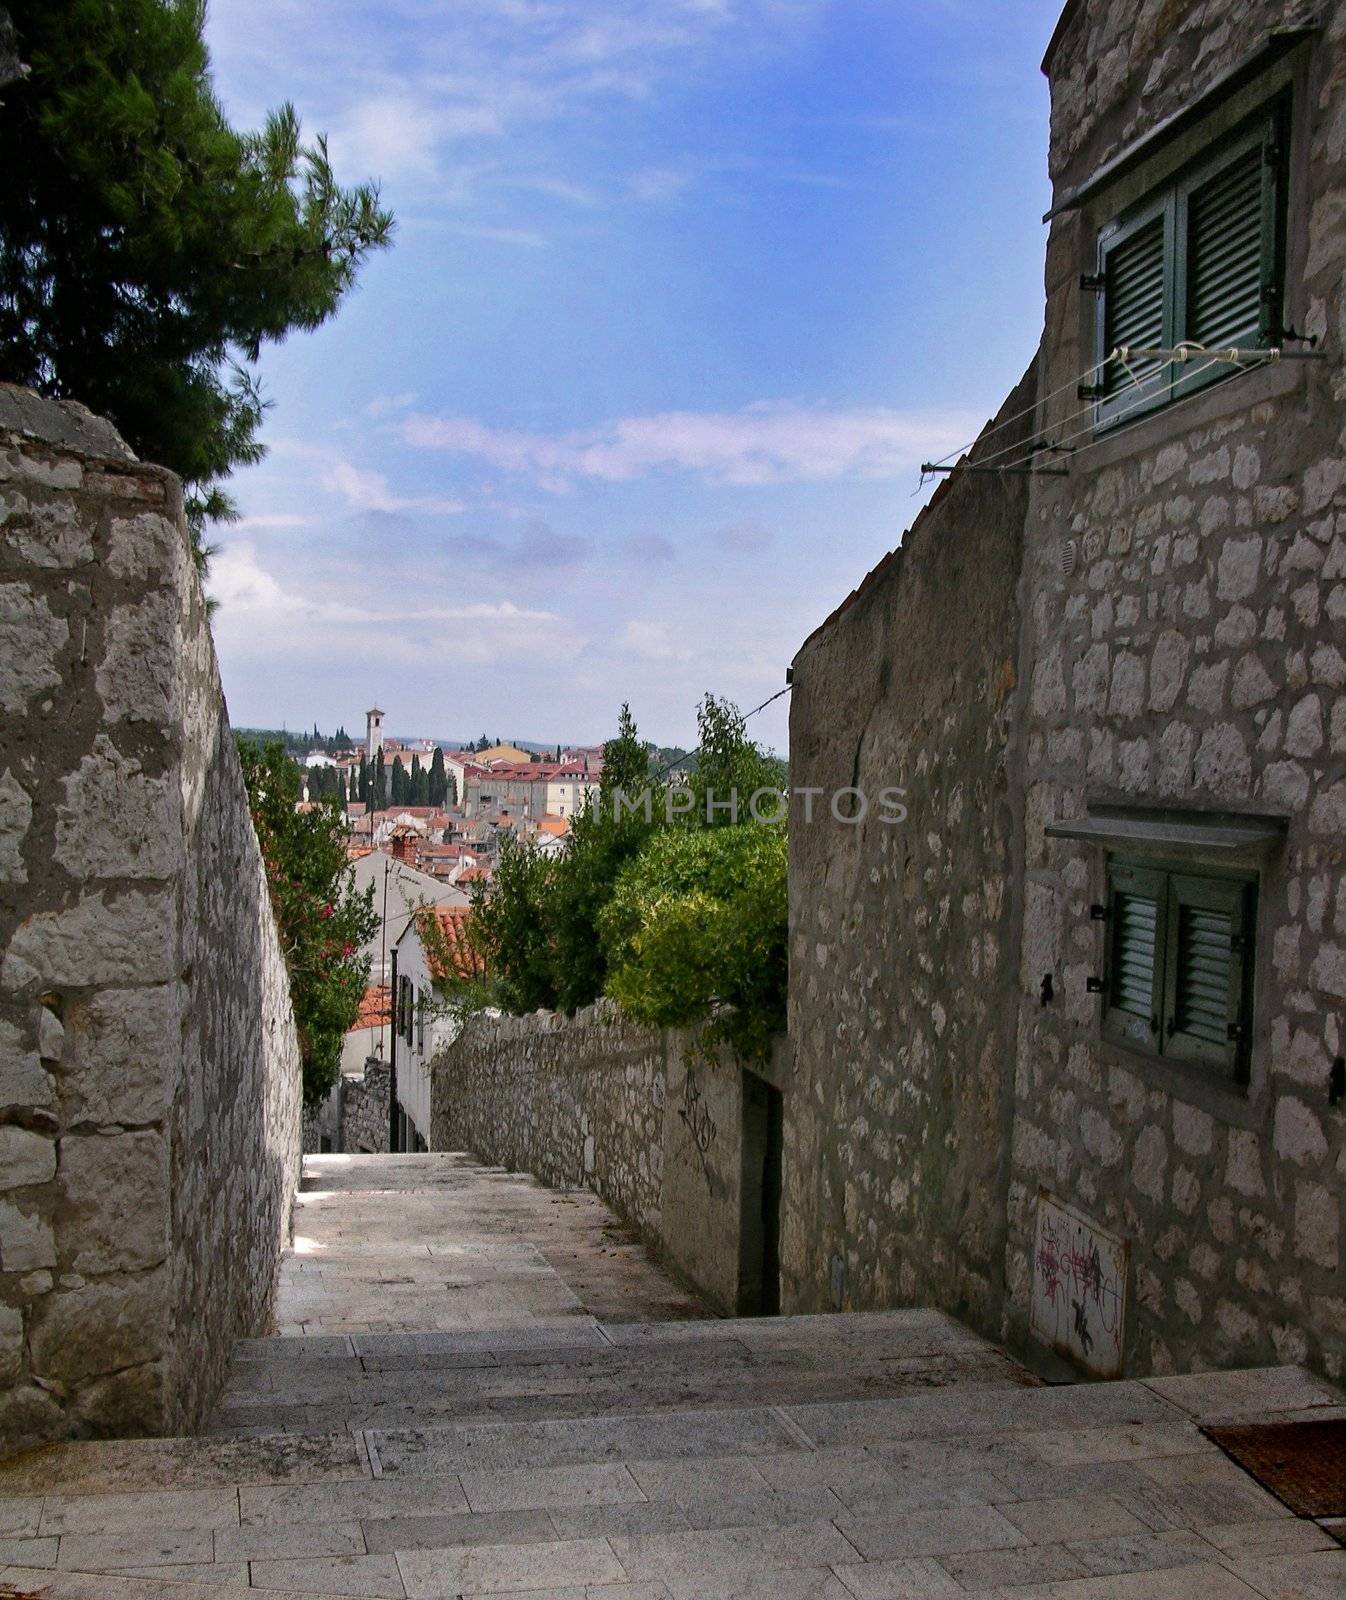 narrow pedestrian street in old town (Rovinj, Croatia)